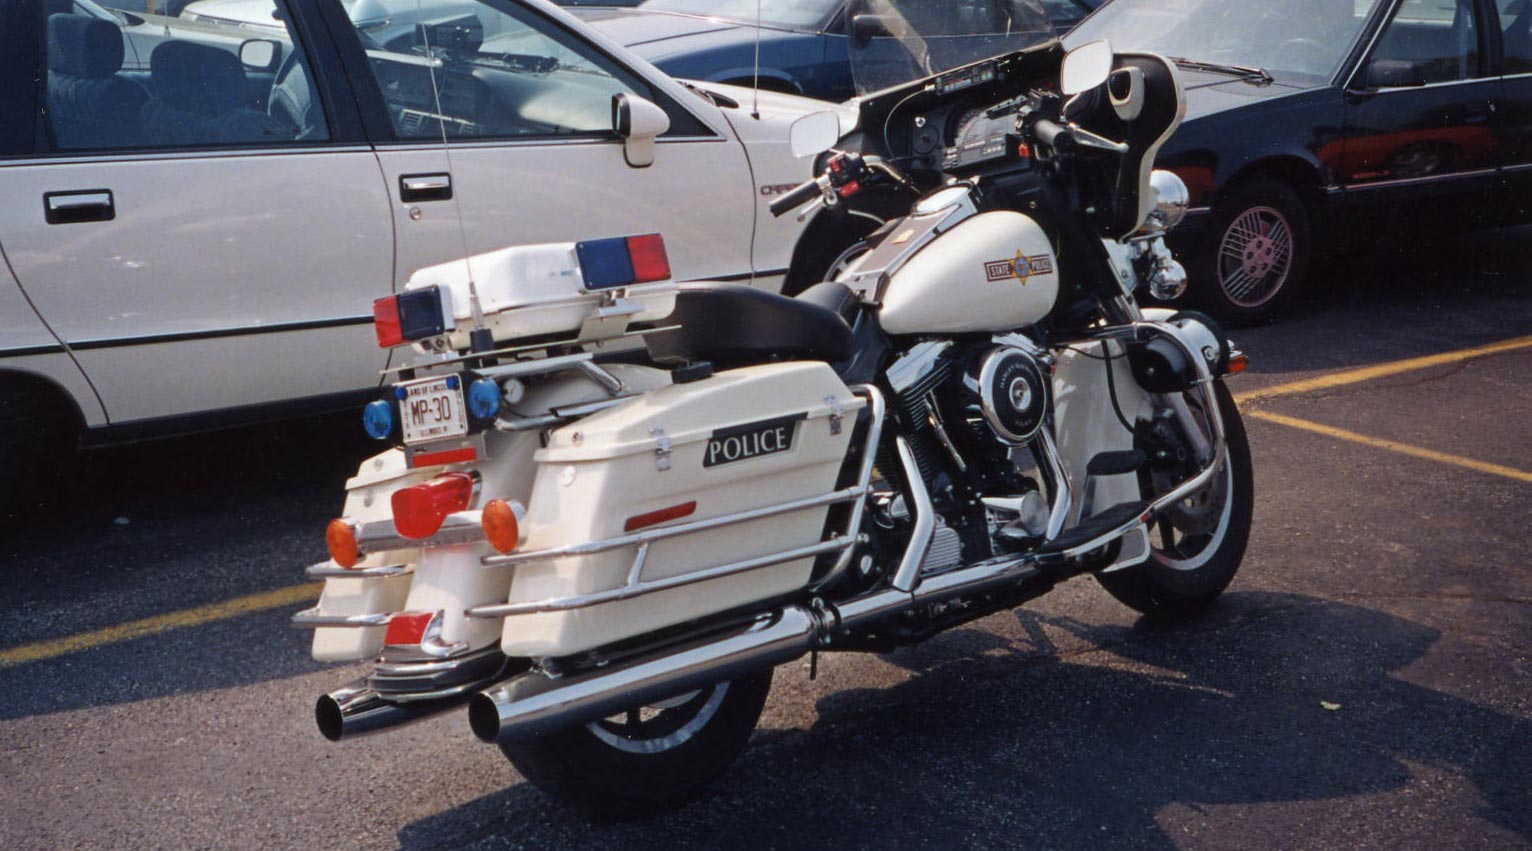 Illinois police motorcycle